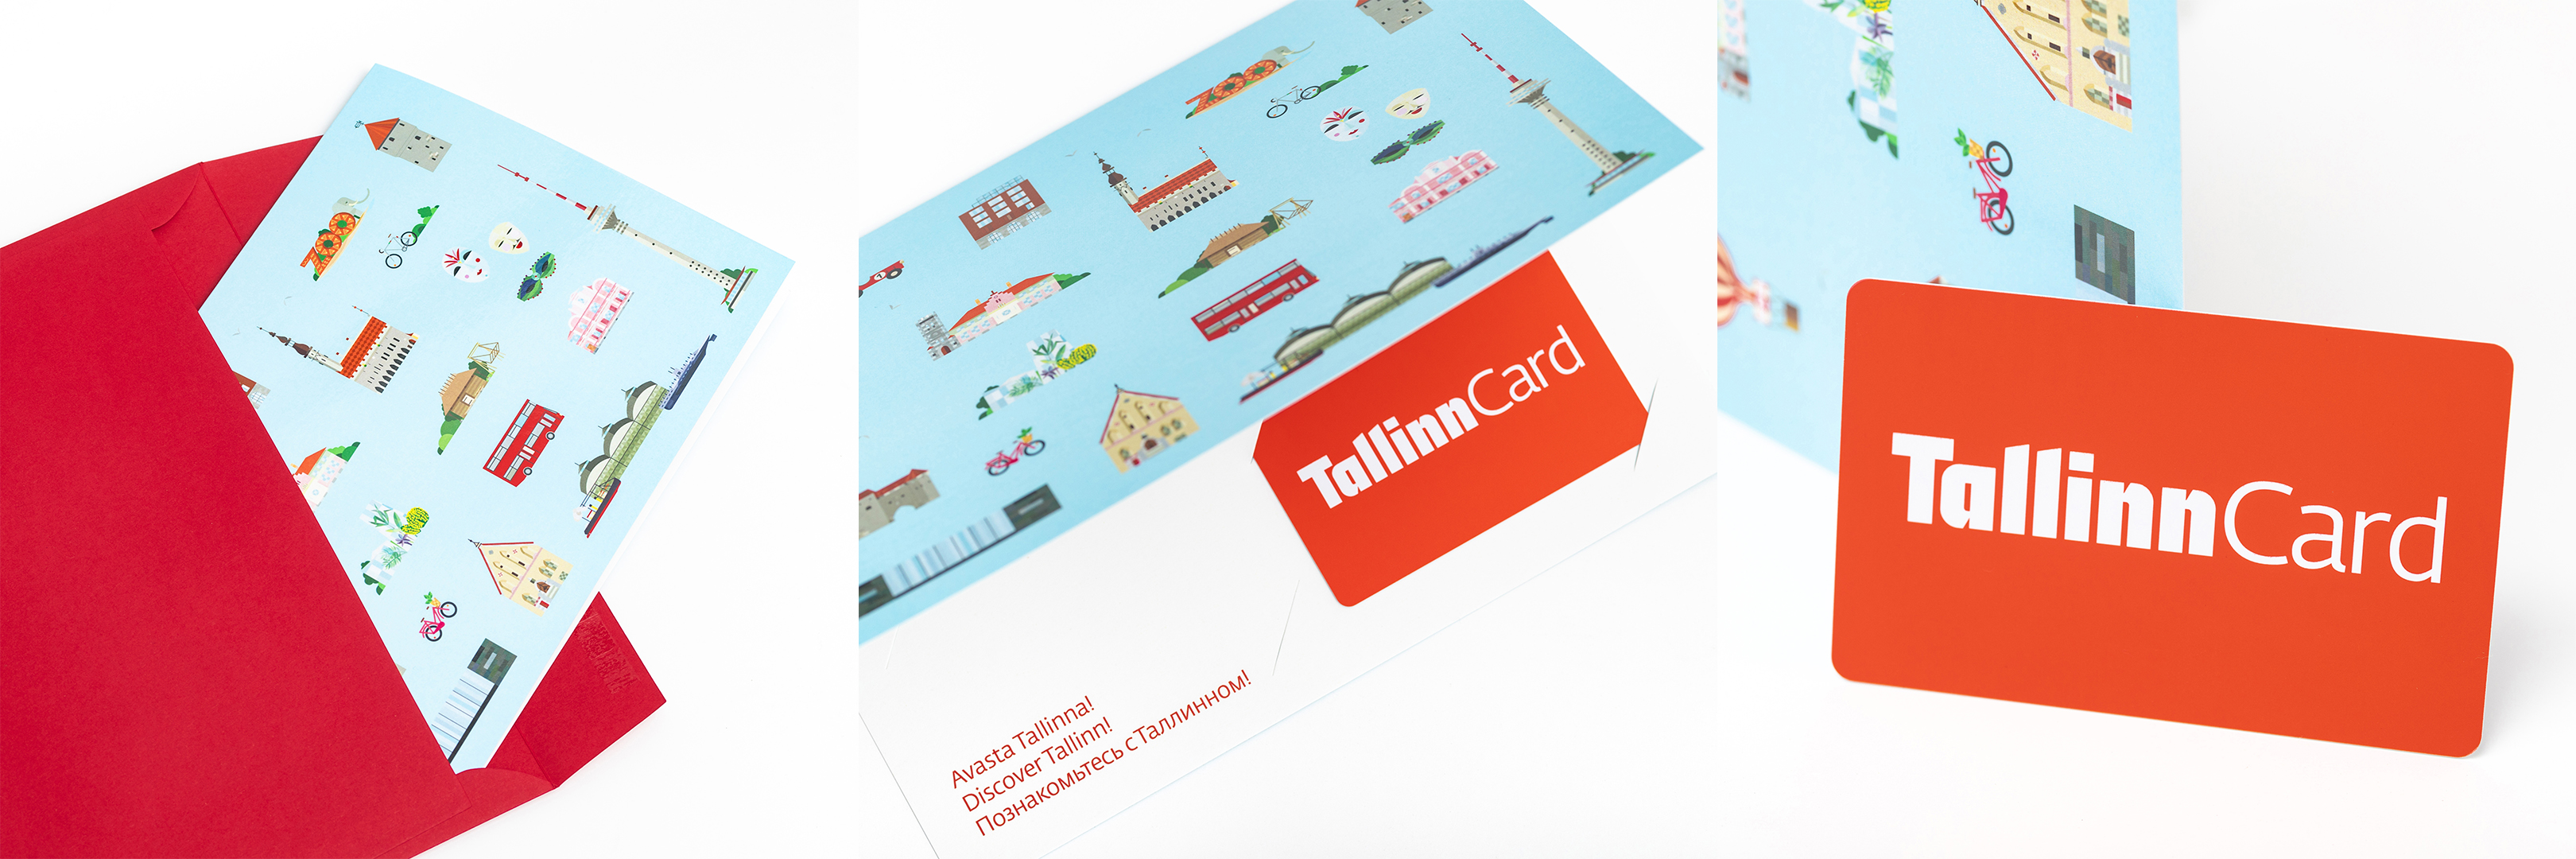 Подарите Tallinn Card